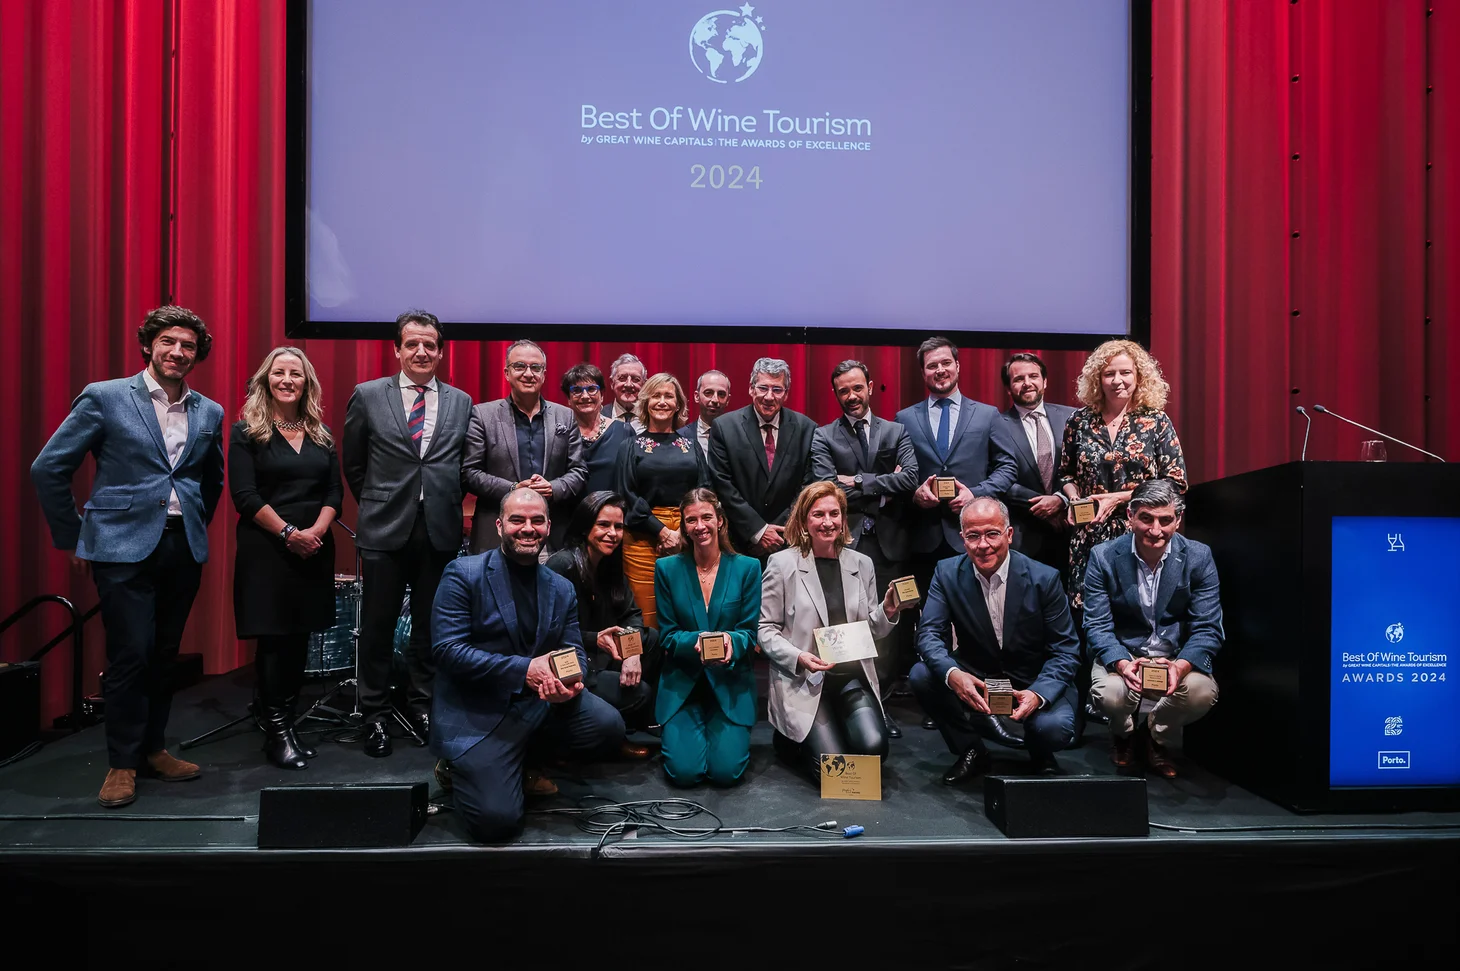 Porto Best Of Wine Tourism 2024 Awards presented at the iconic Casa da Música